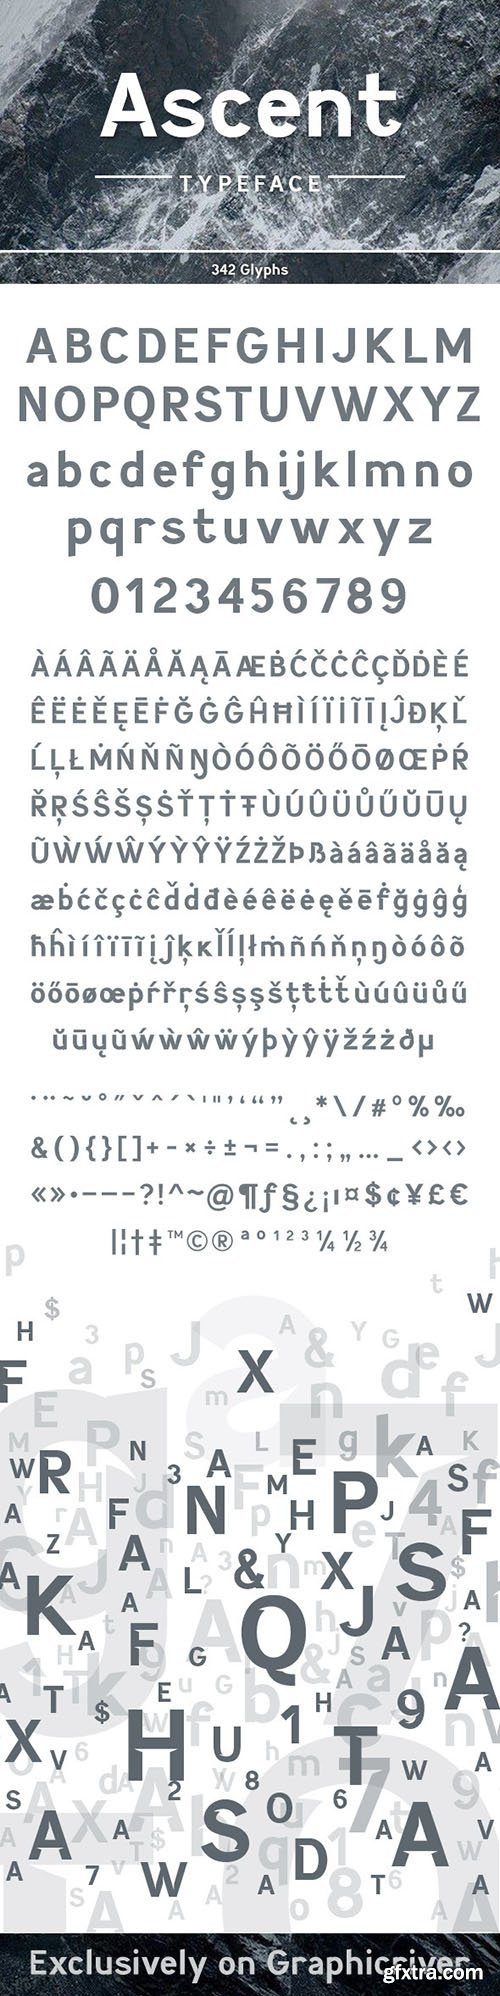 GraphicRiver - Ascent Typeface 9929760